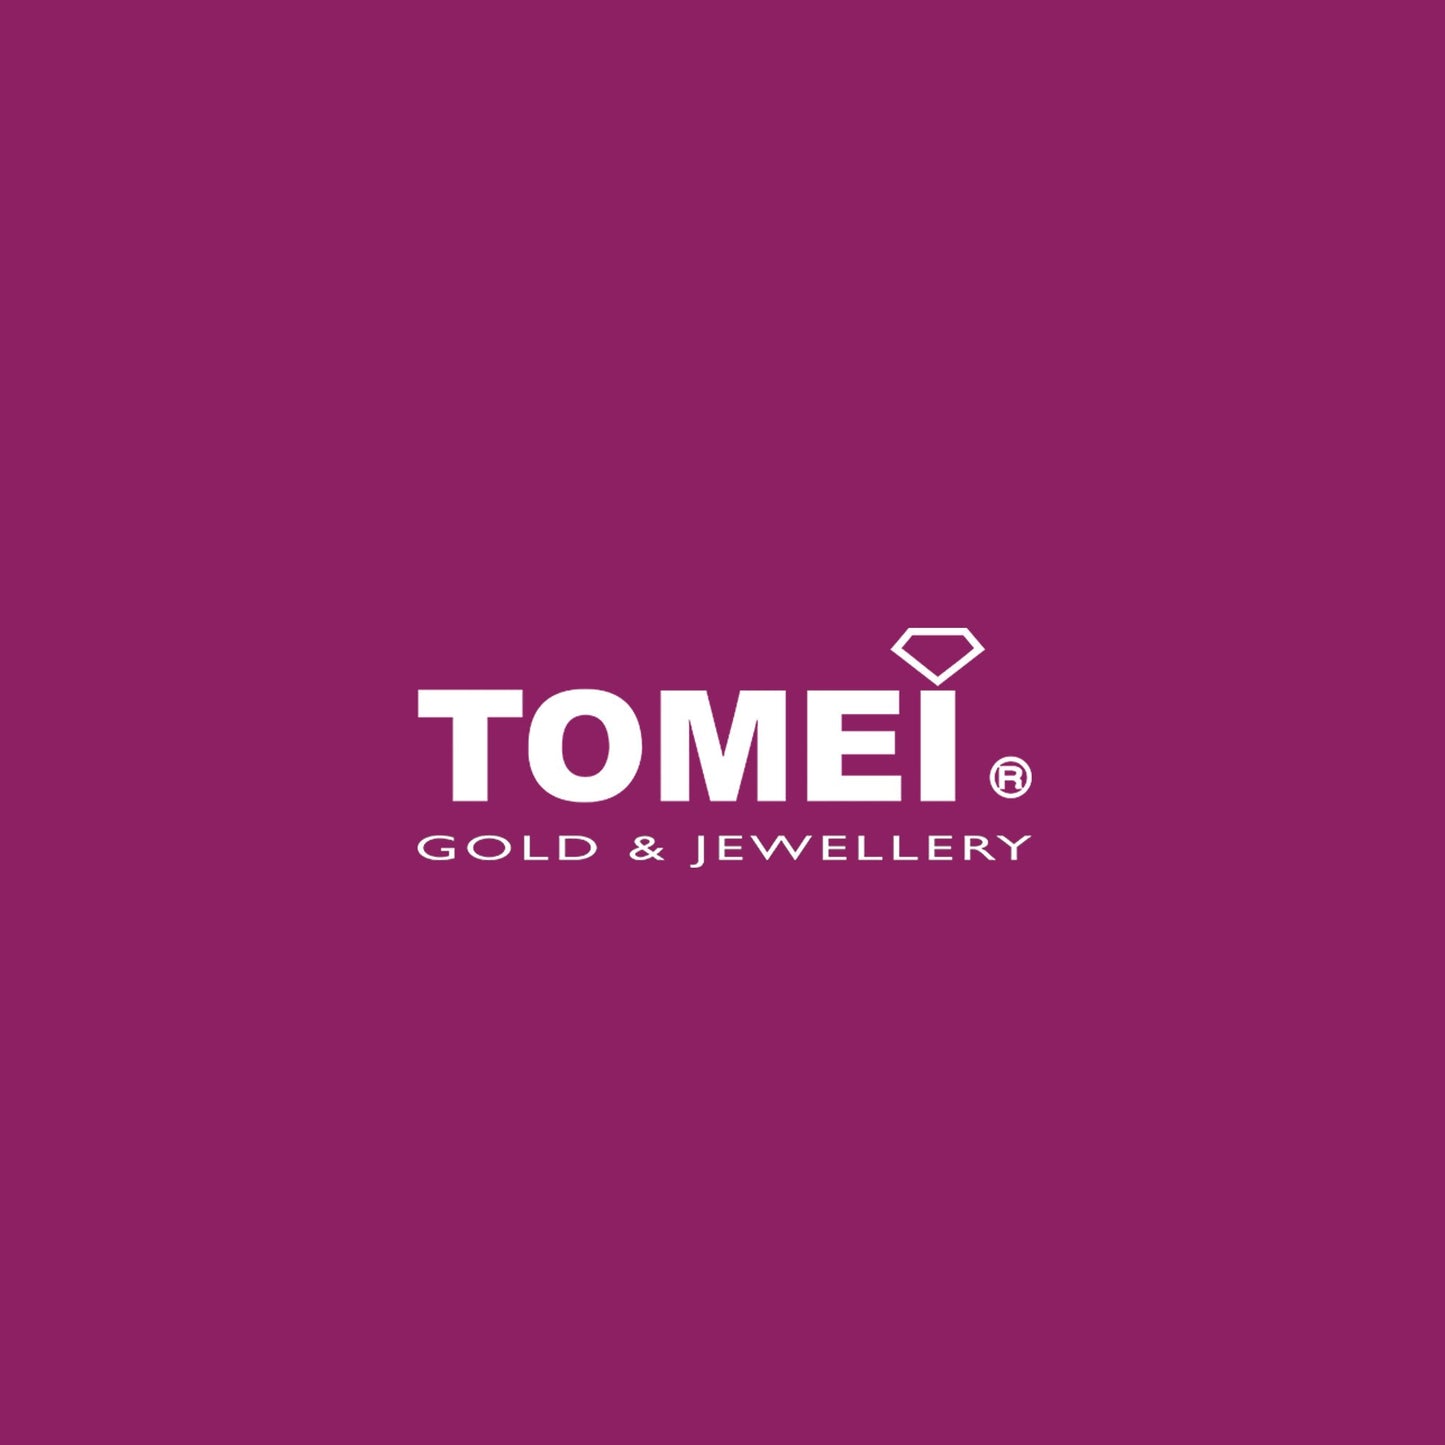 TOMEI Money Tree Charm, Yellow Gold 916